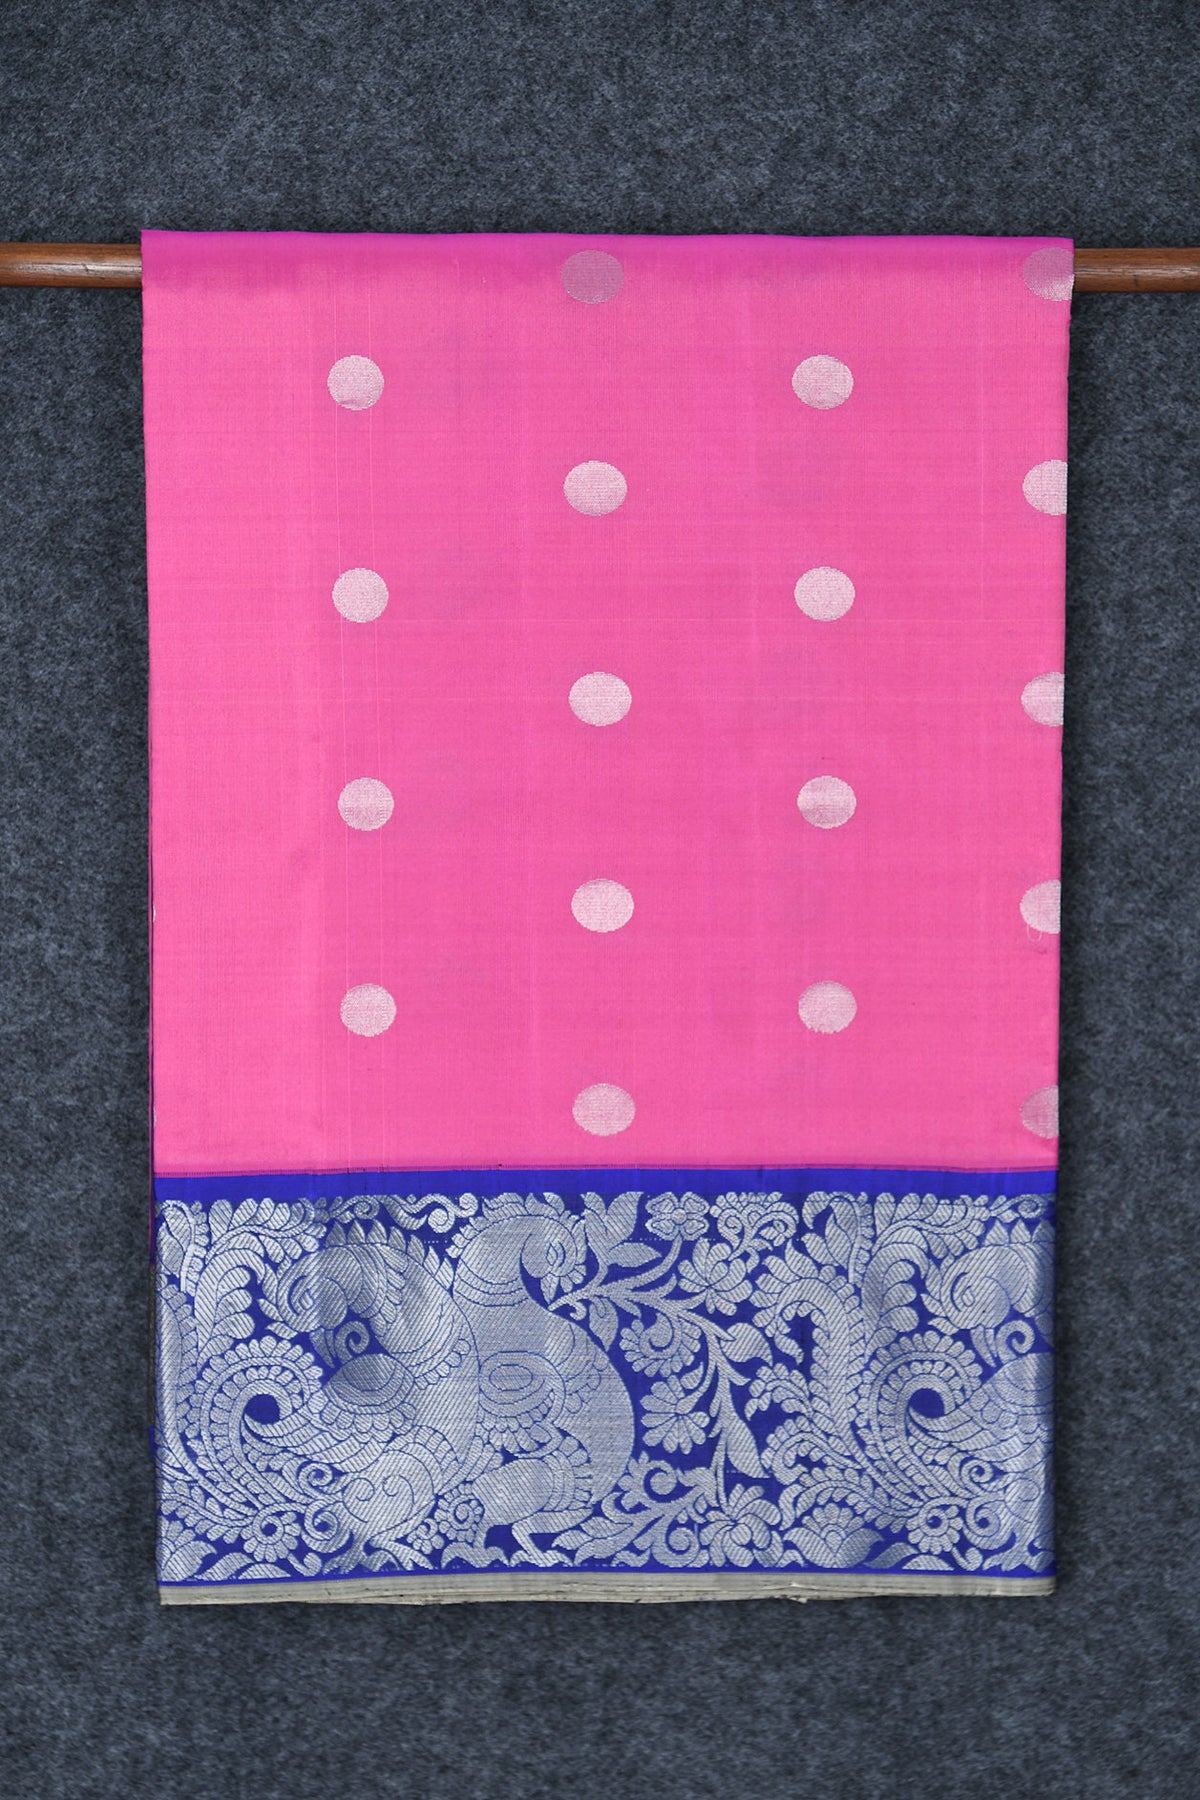 Polka Dots With Contrast Border Hot Pink Soft Silk Saree